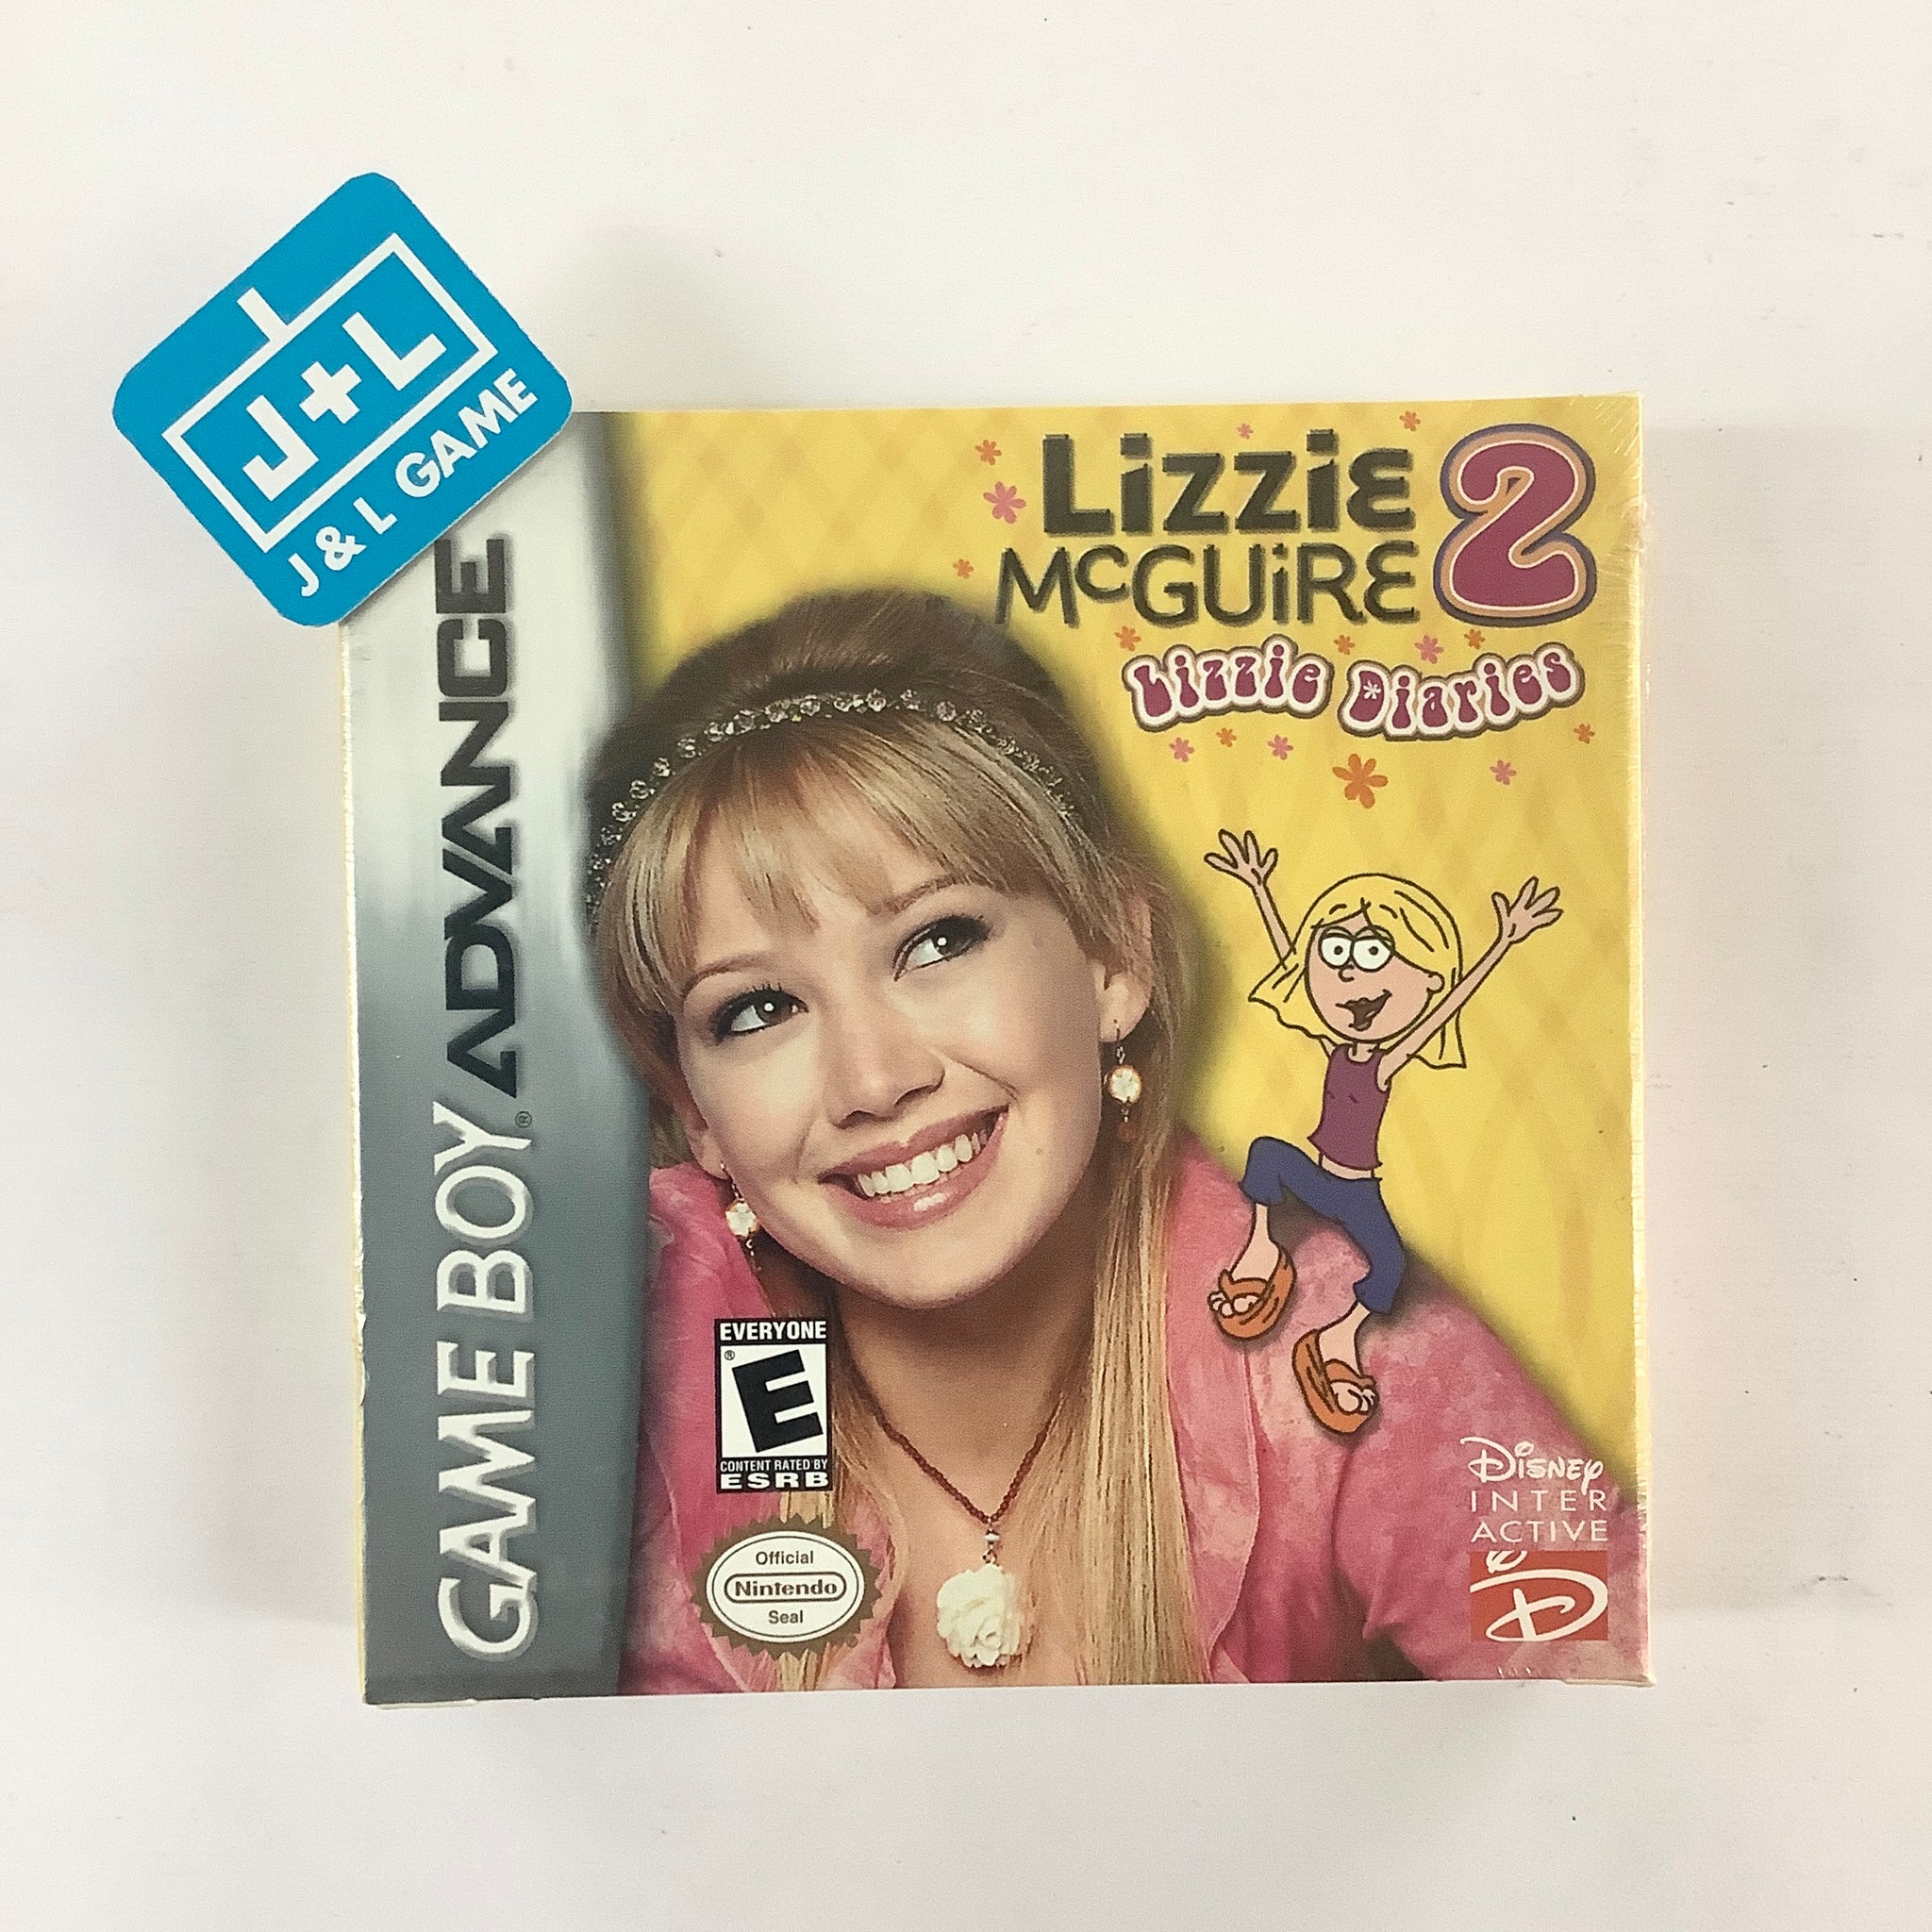 Lizzie McGuire 2: Lizzie Diaries - (GBA) Game Boy Advance Video Games Disney Interactive   